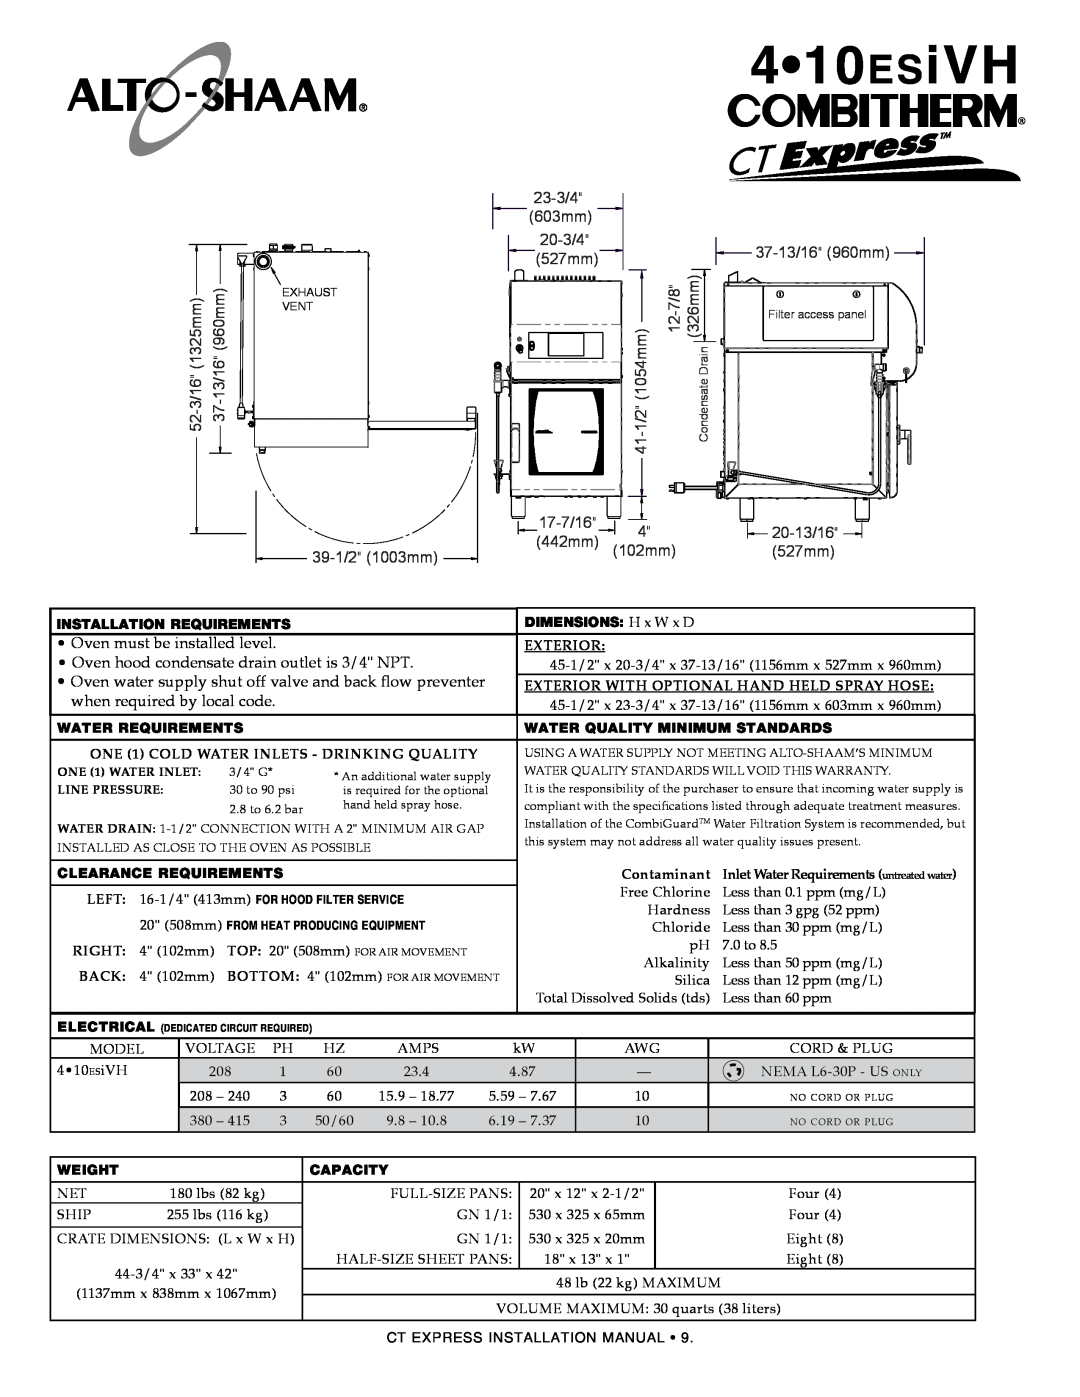 Alto-Shaam 4.10esi manual 410esiVH, 1325mm 960mm VENT 13/16 3/16- -37 39-1/2 1003mm, 23-3/4, 603mm, 20-3/4, 527mm, 17-7/16 